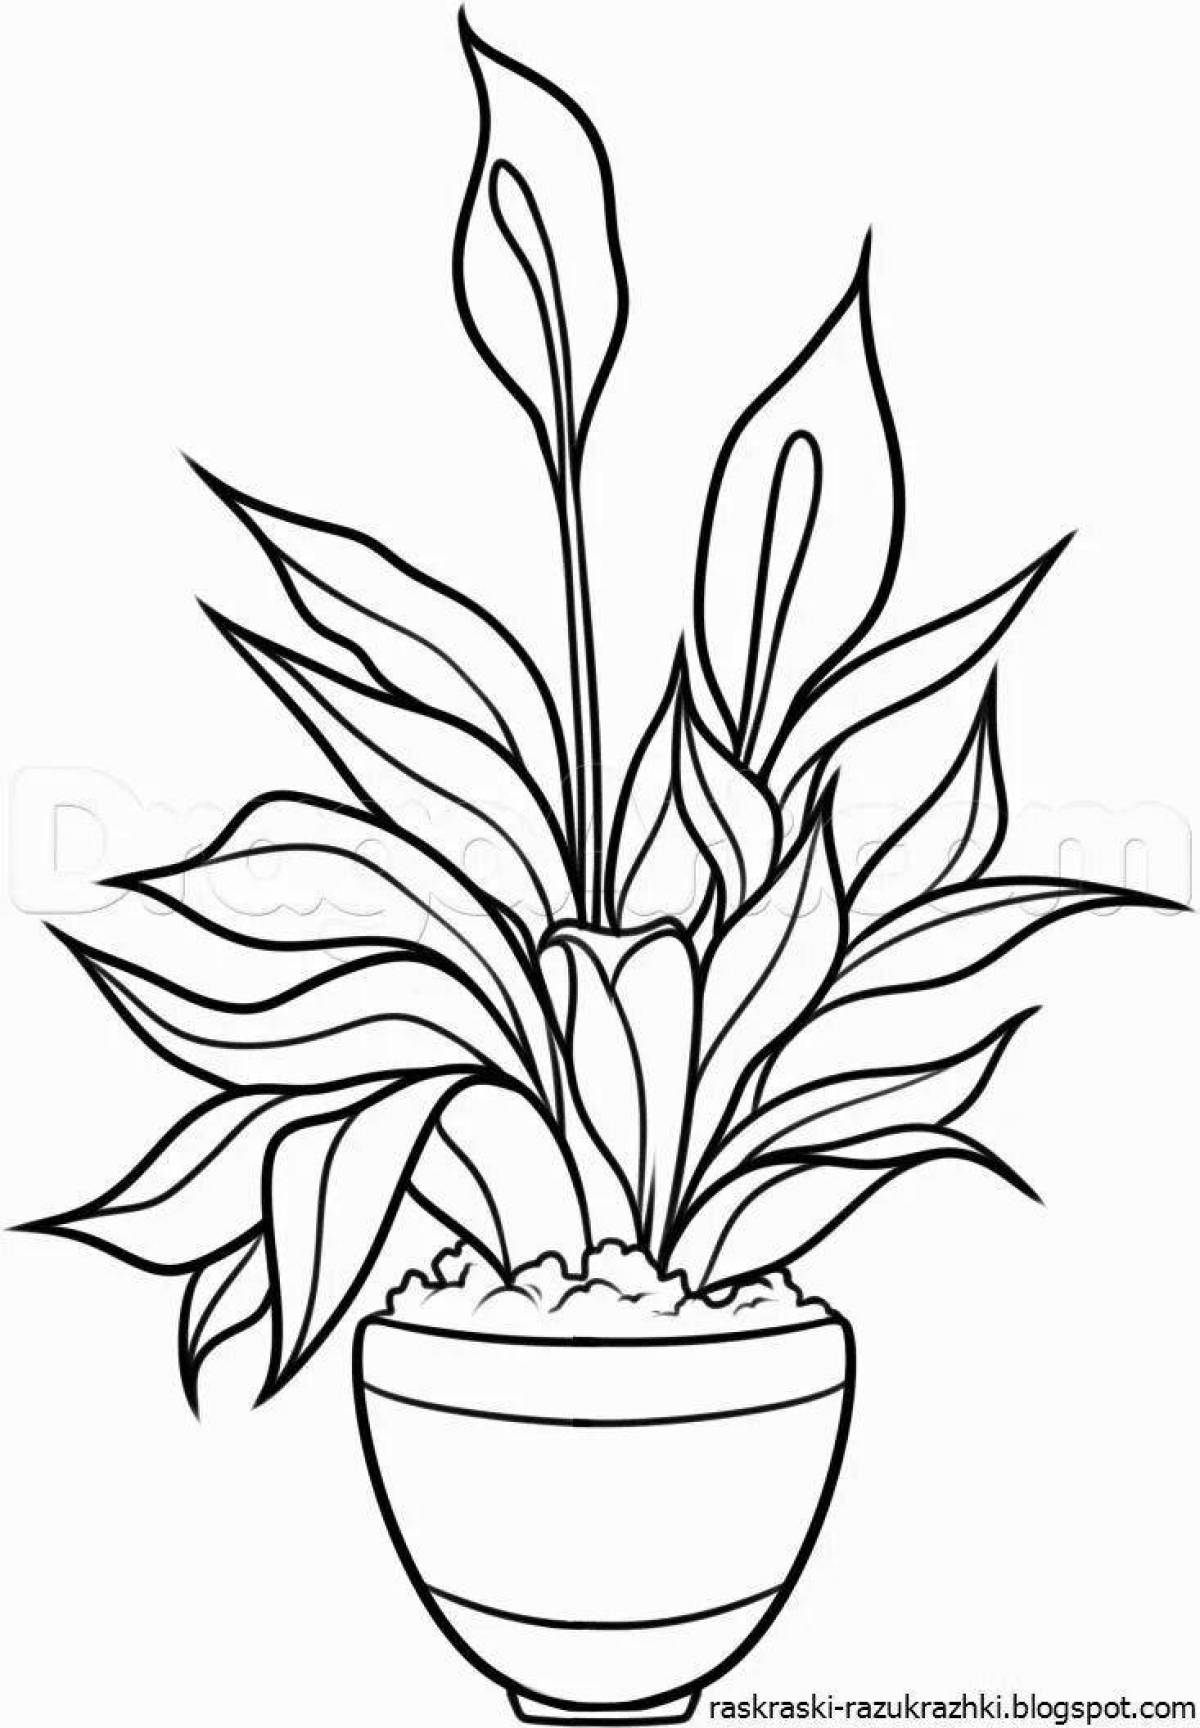 фото растений нарисованных